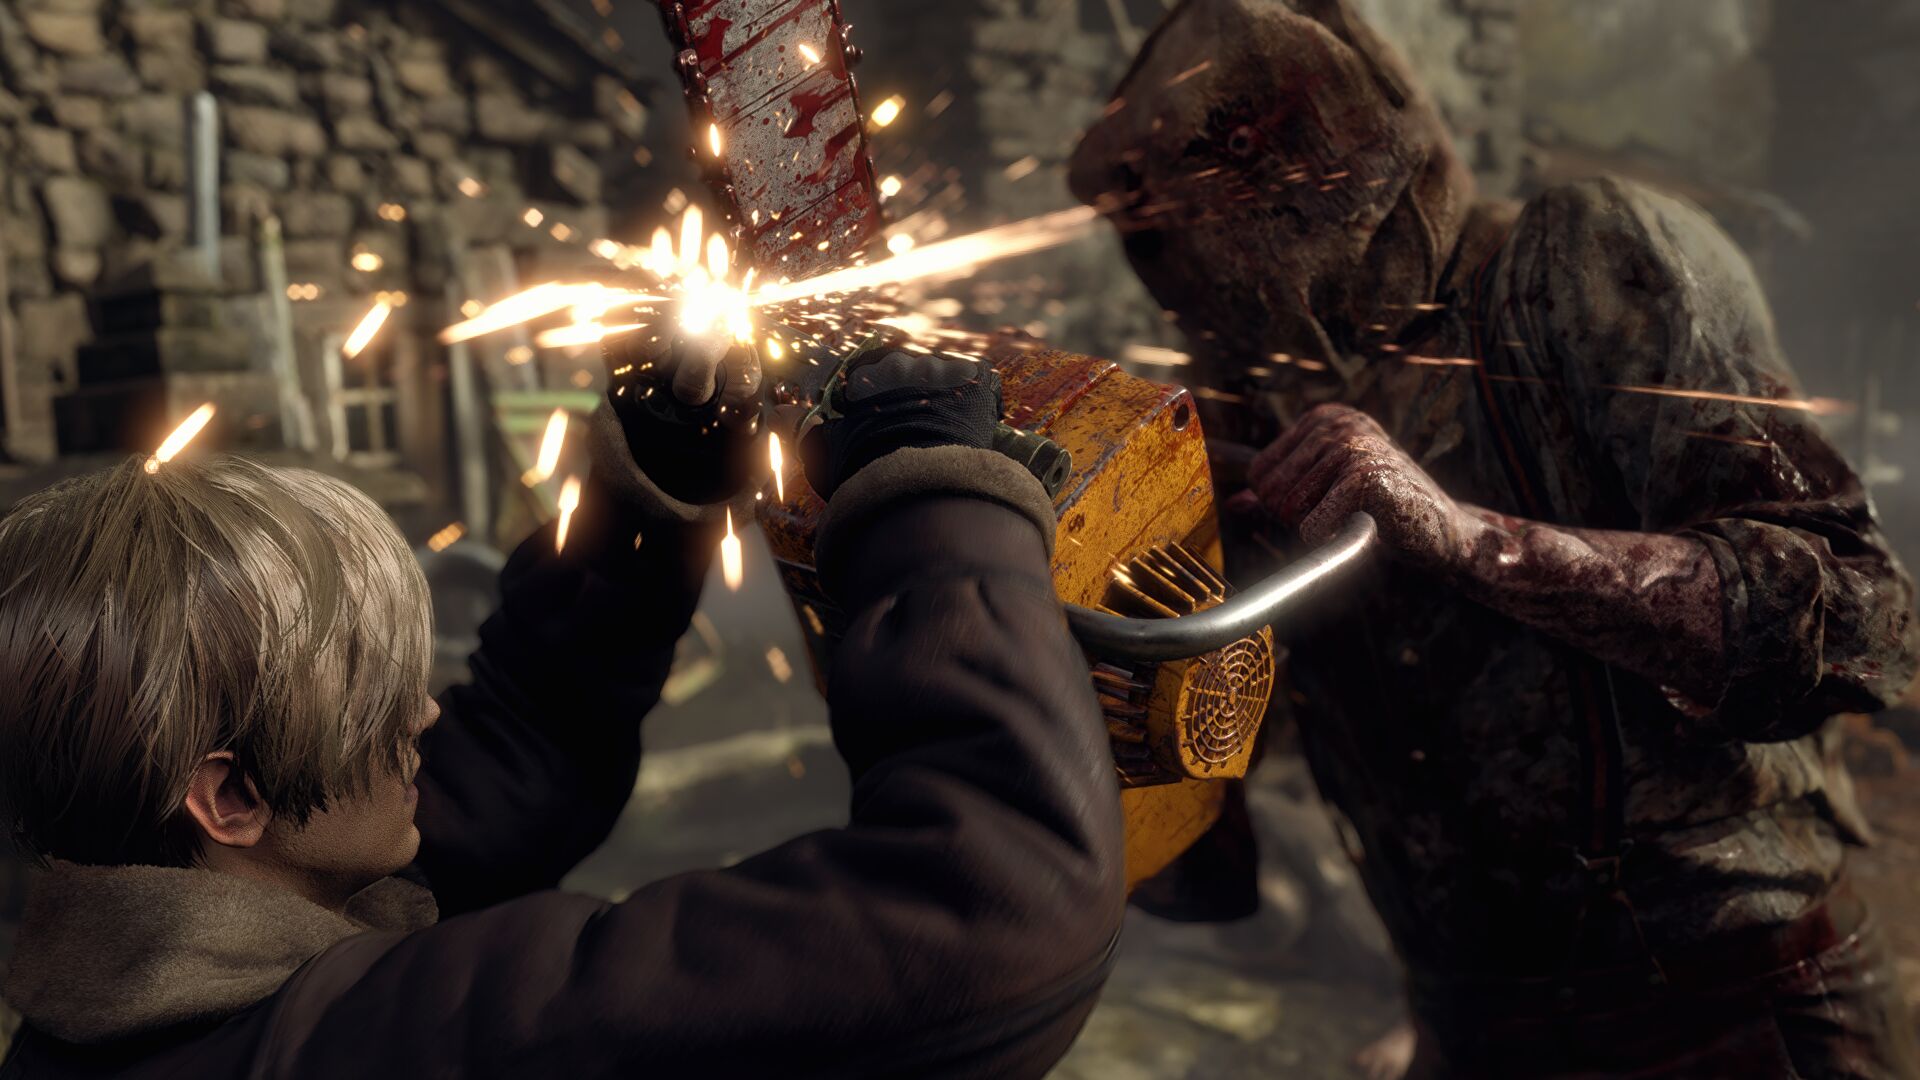 Resident Evil 4 isn’t just a remake, it’s a visceral reimagining